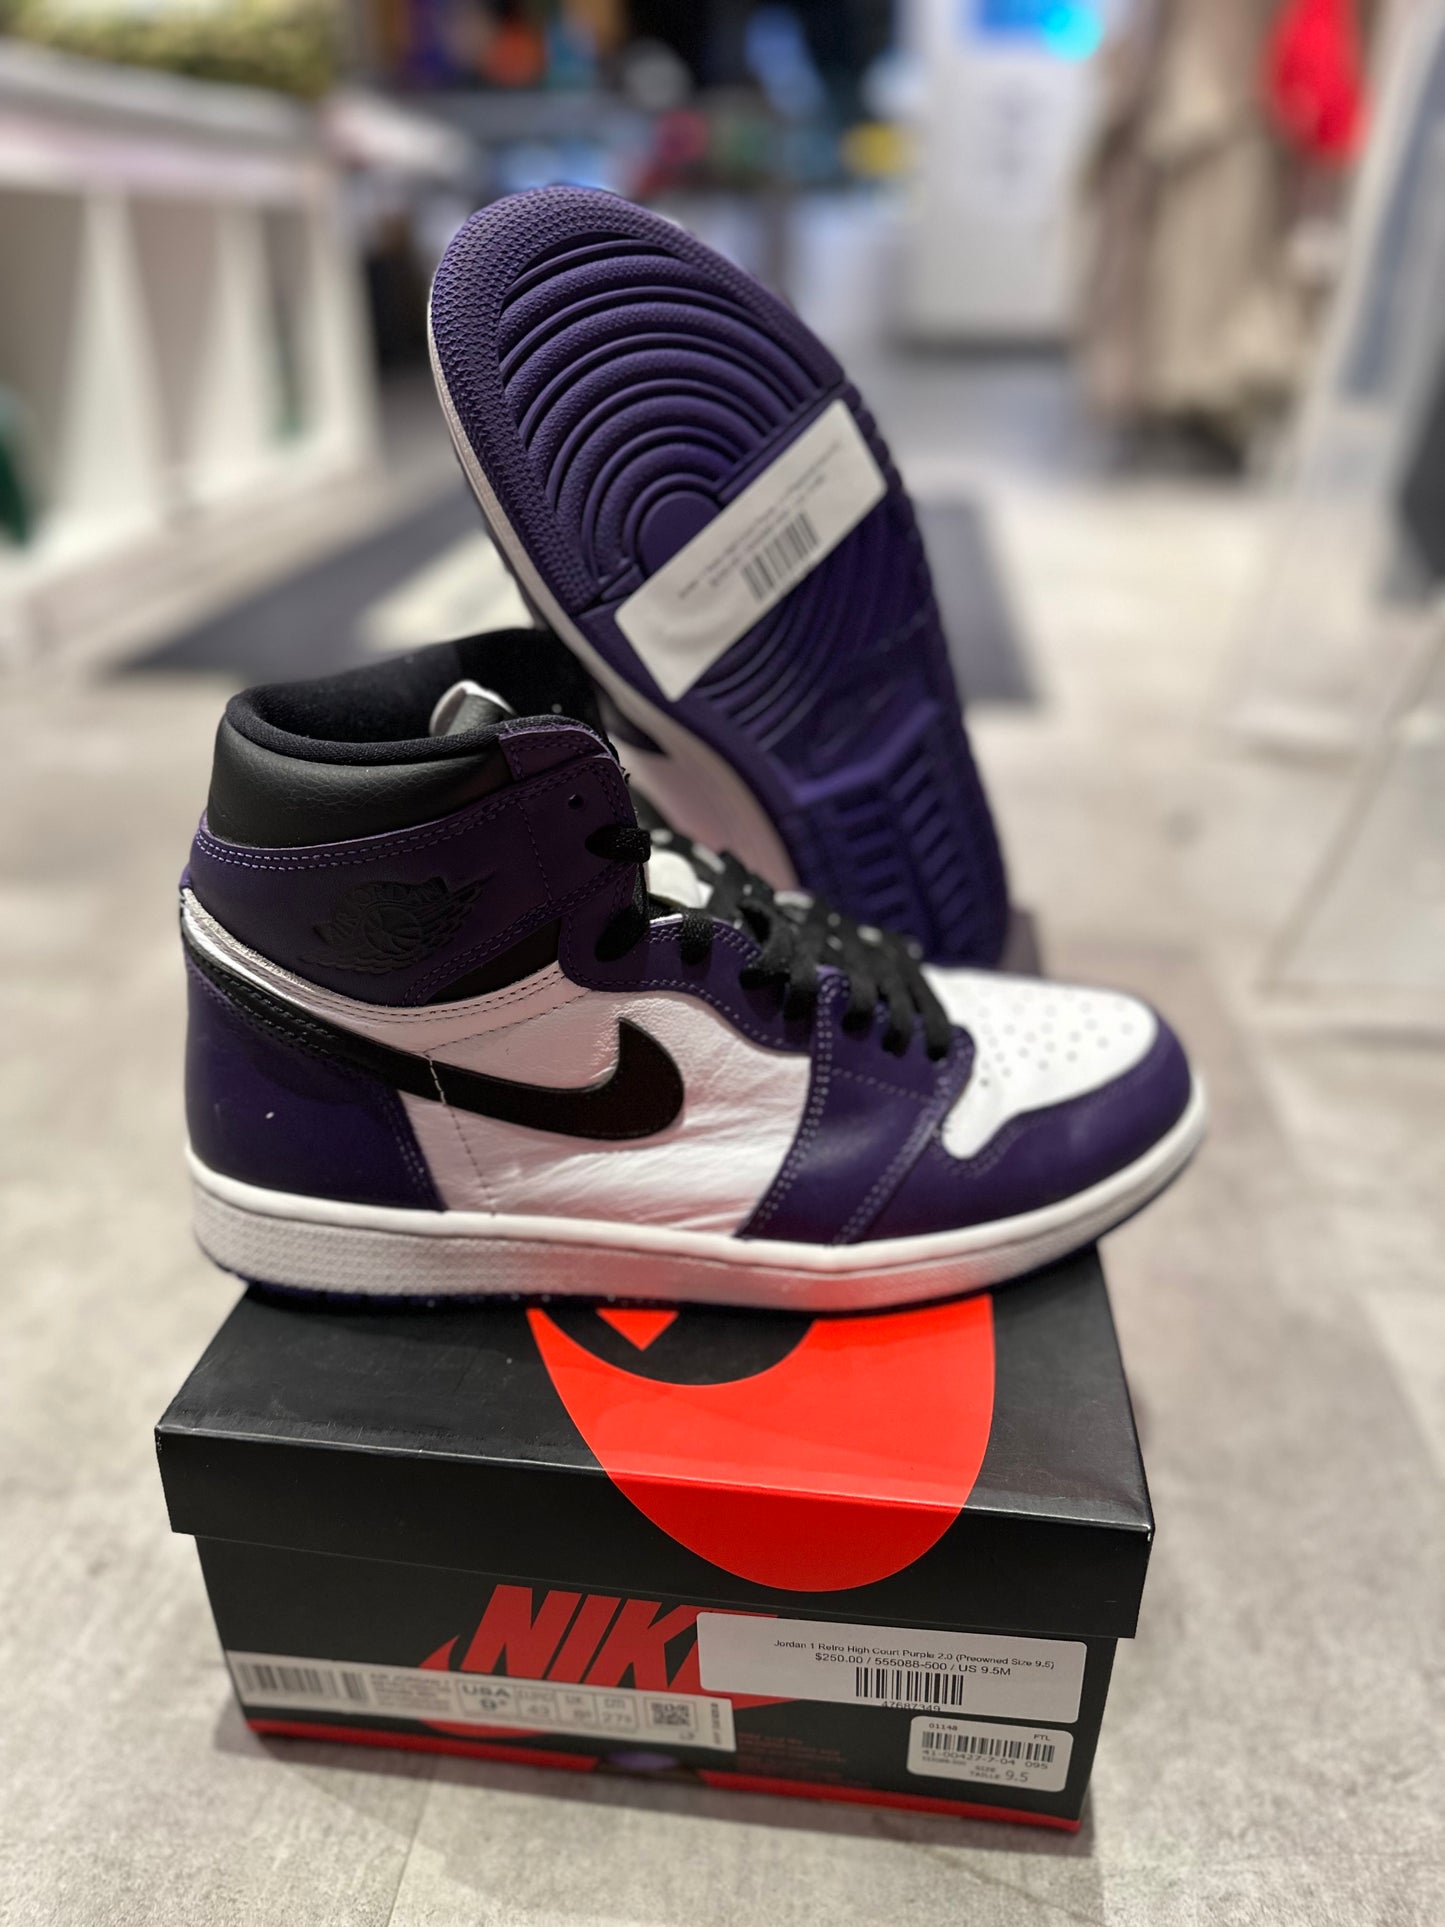 Jordan 1 Retro High Court Purple 2.0 (Preowned Size 9.5)